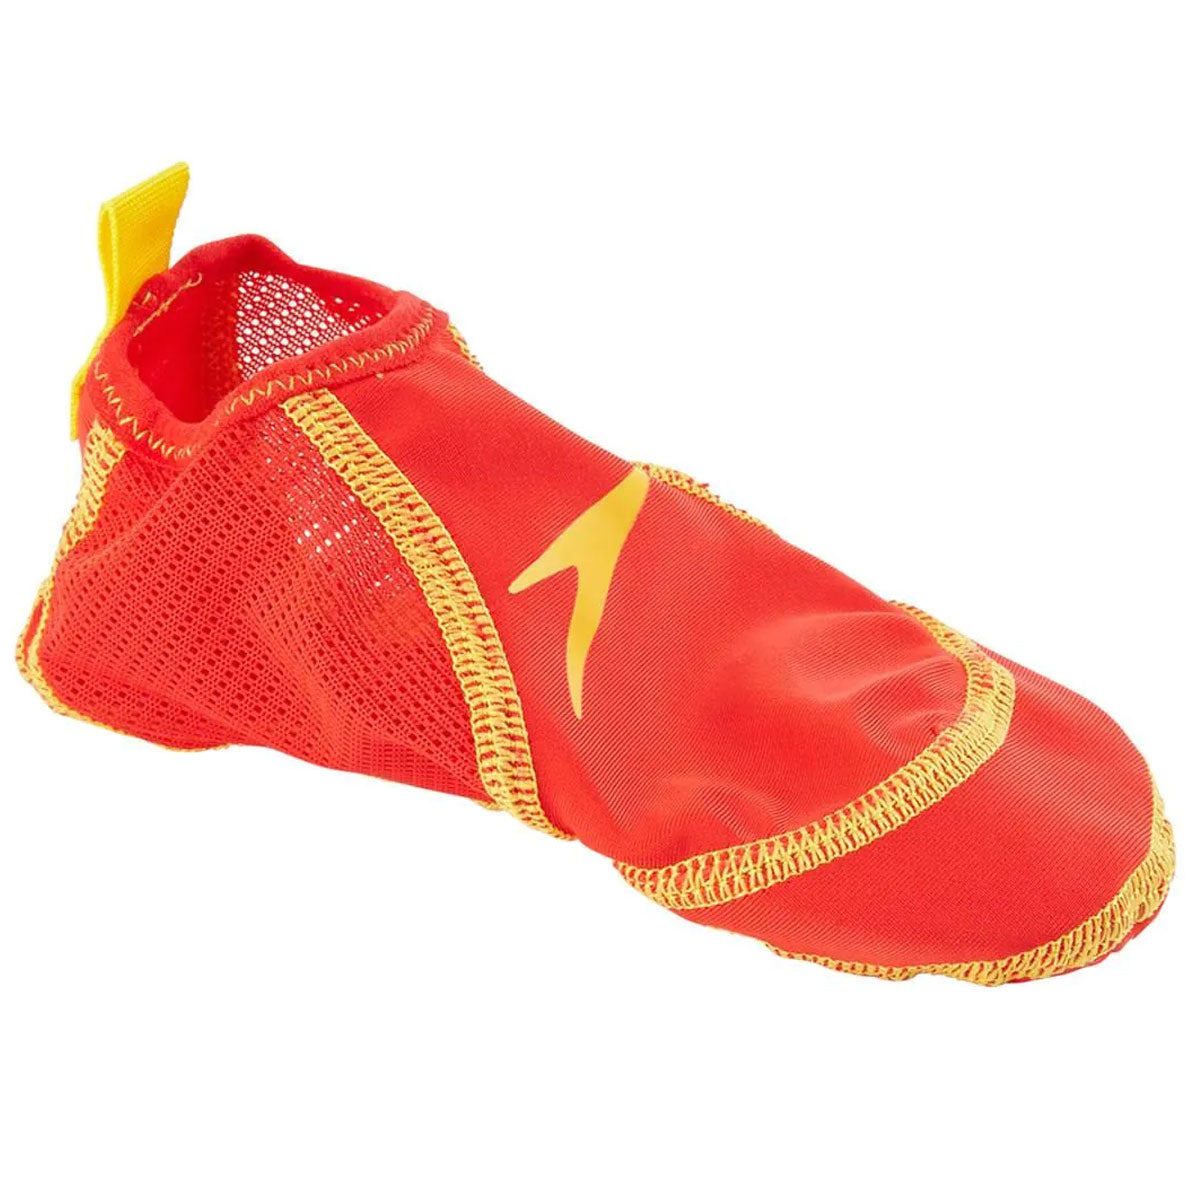 Speedo Pool Sock - Youth - Yellow/Red